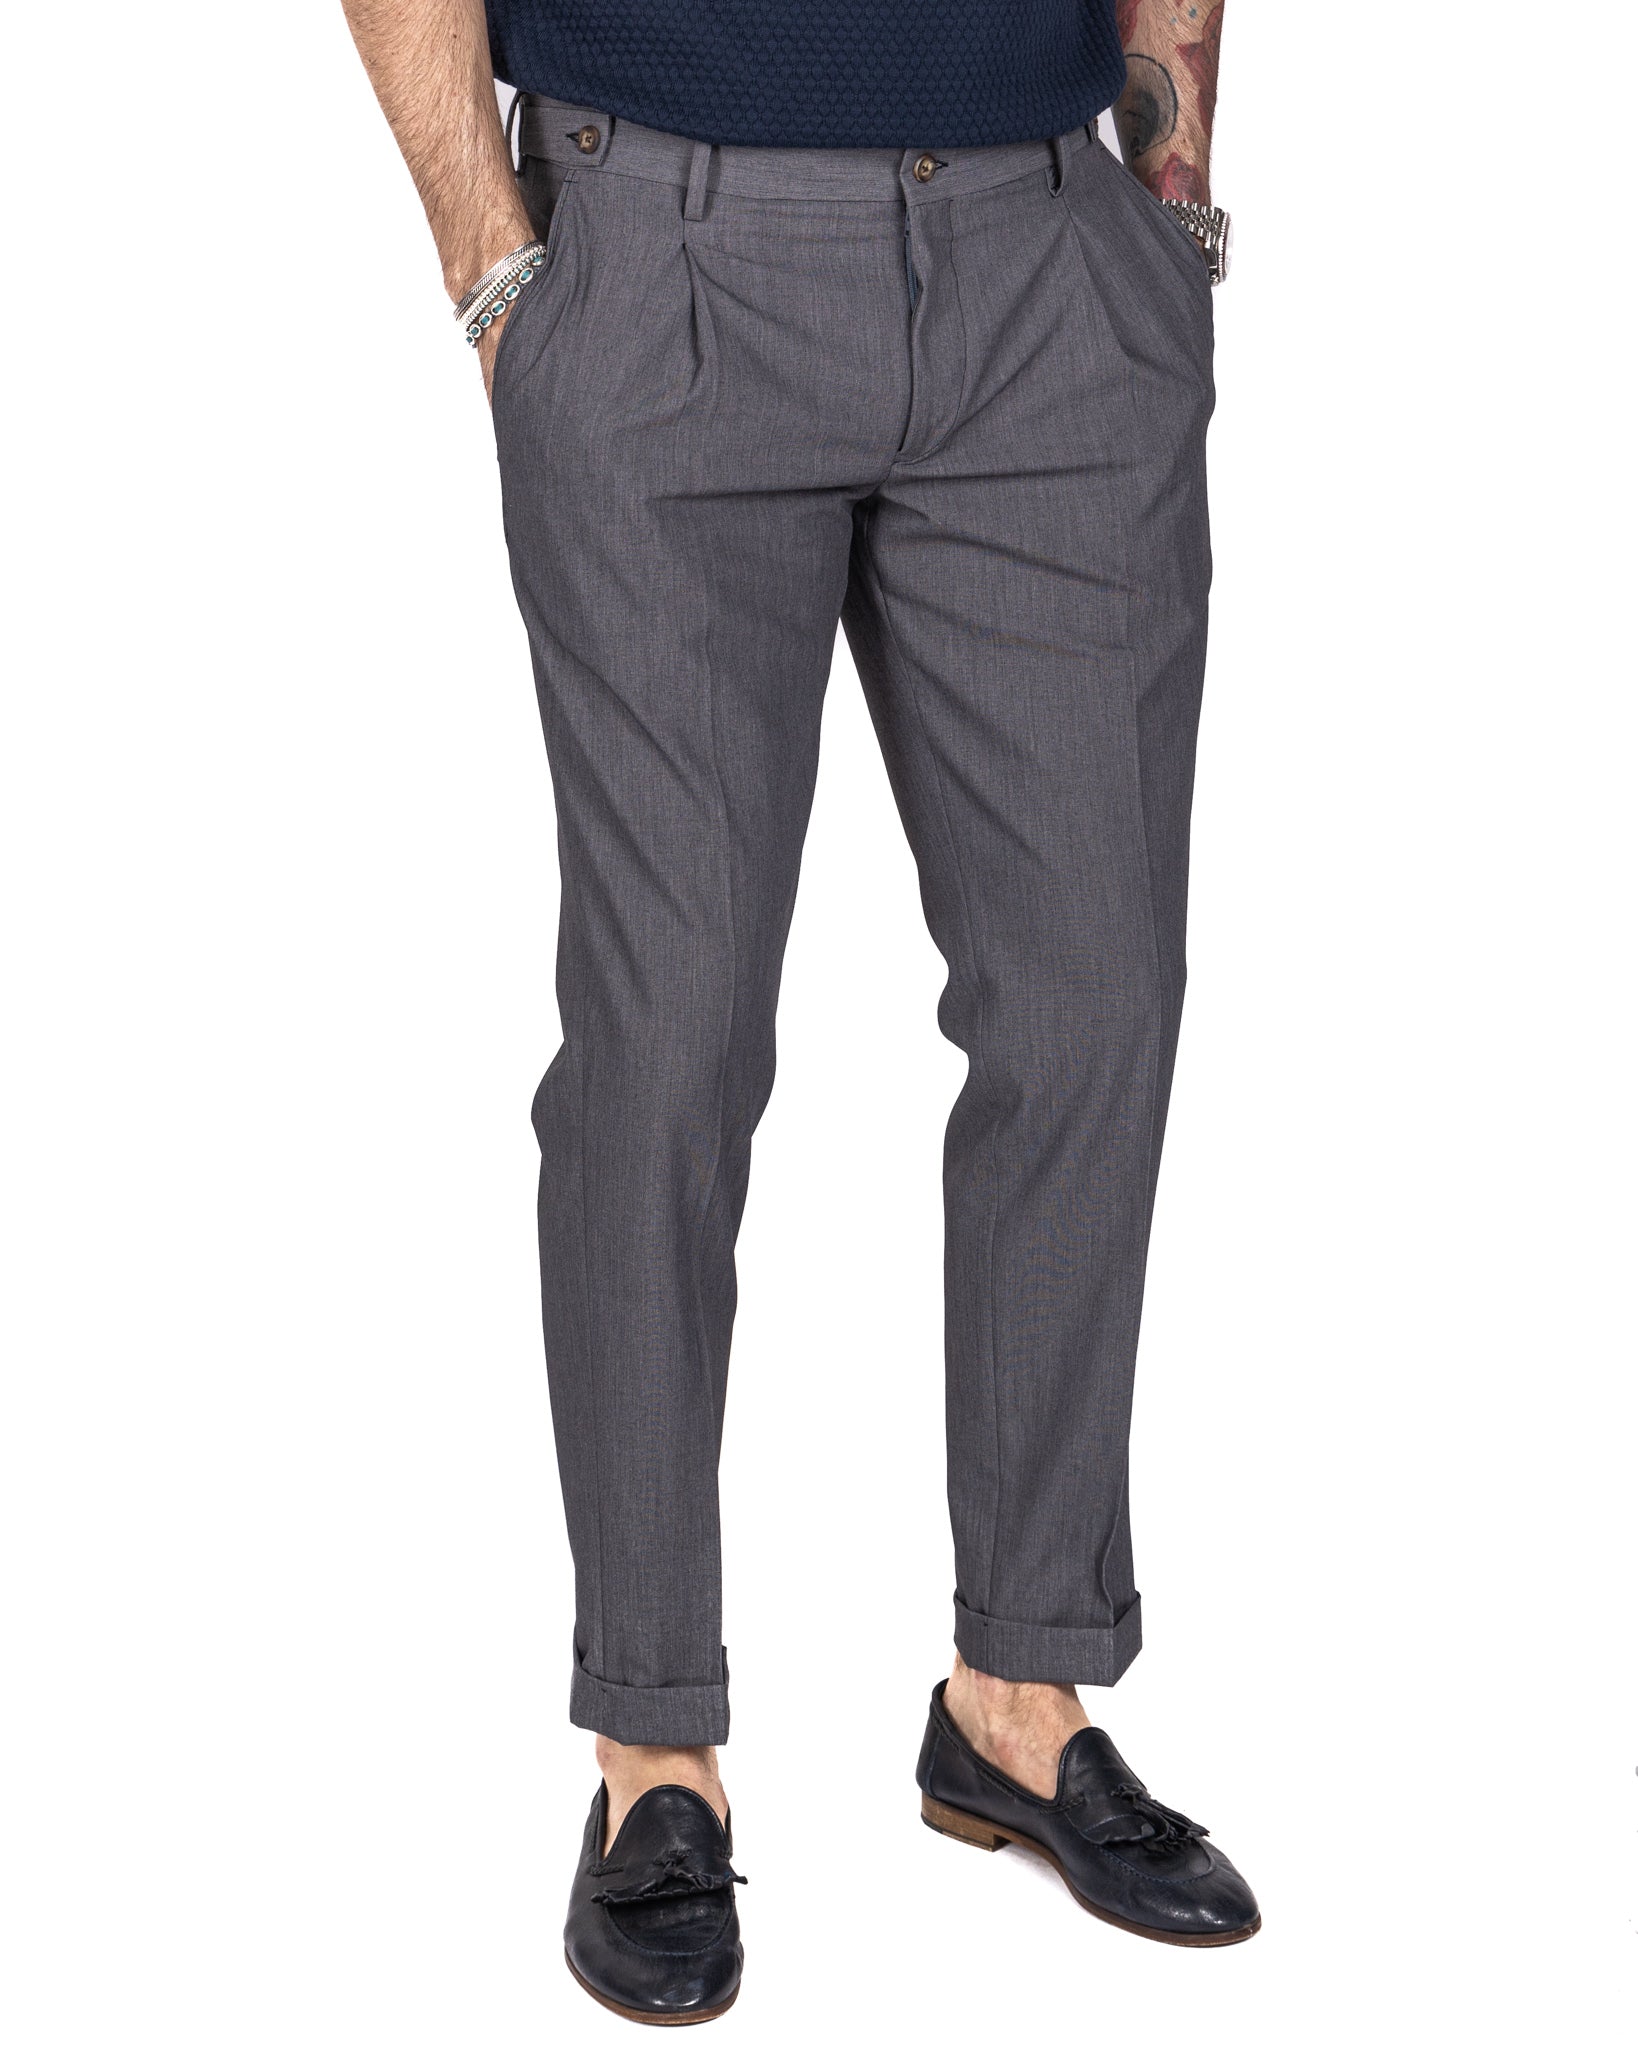 Milano - pantalon basique gris